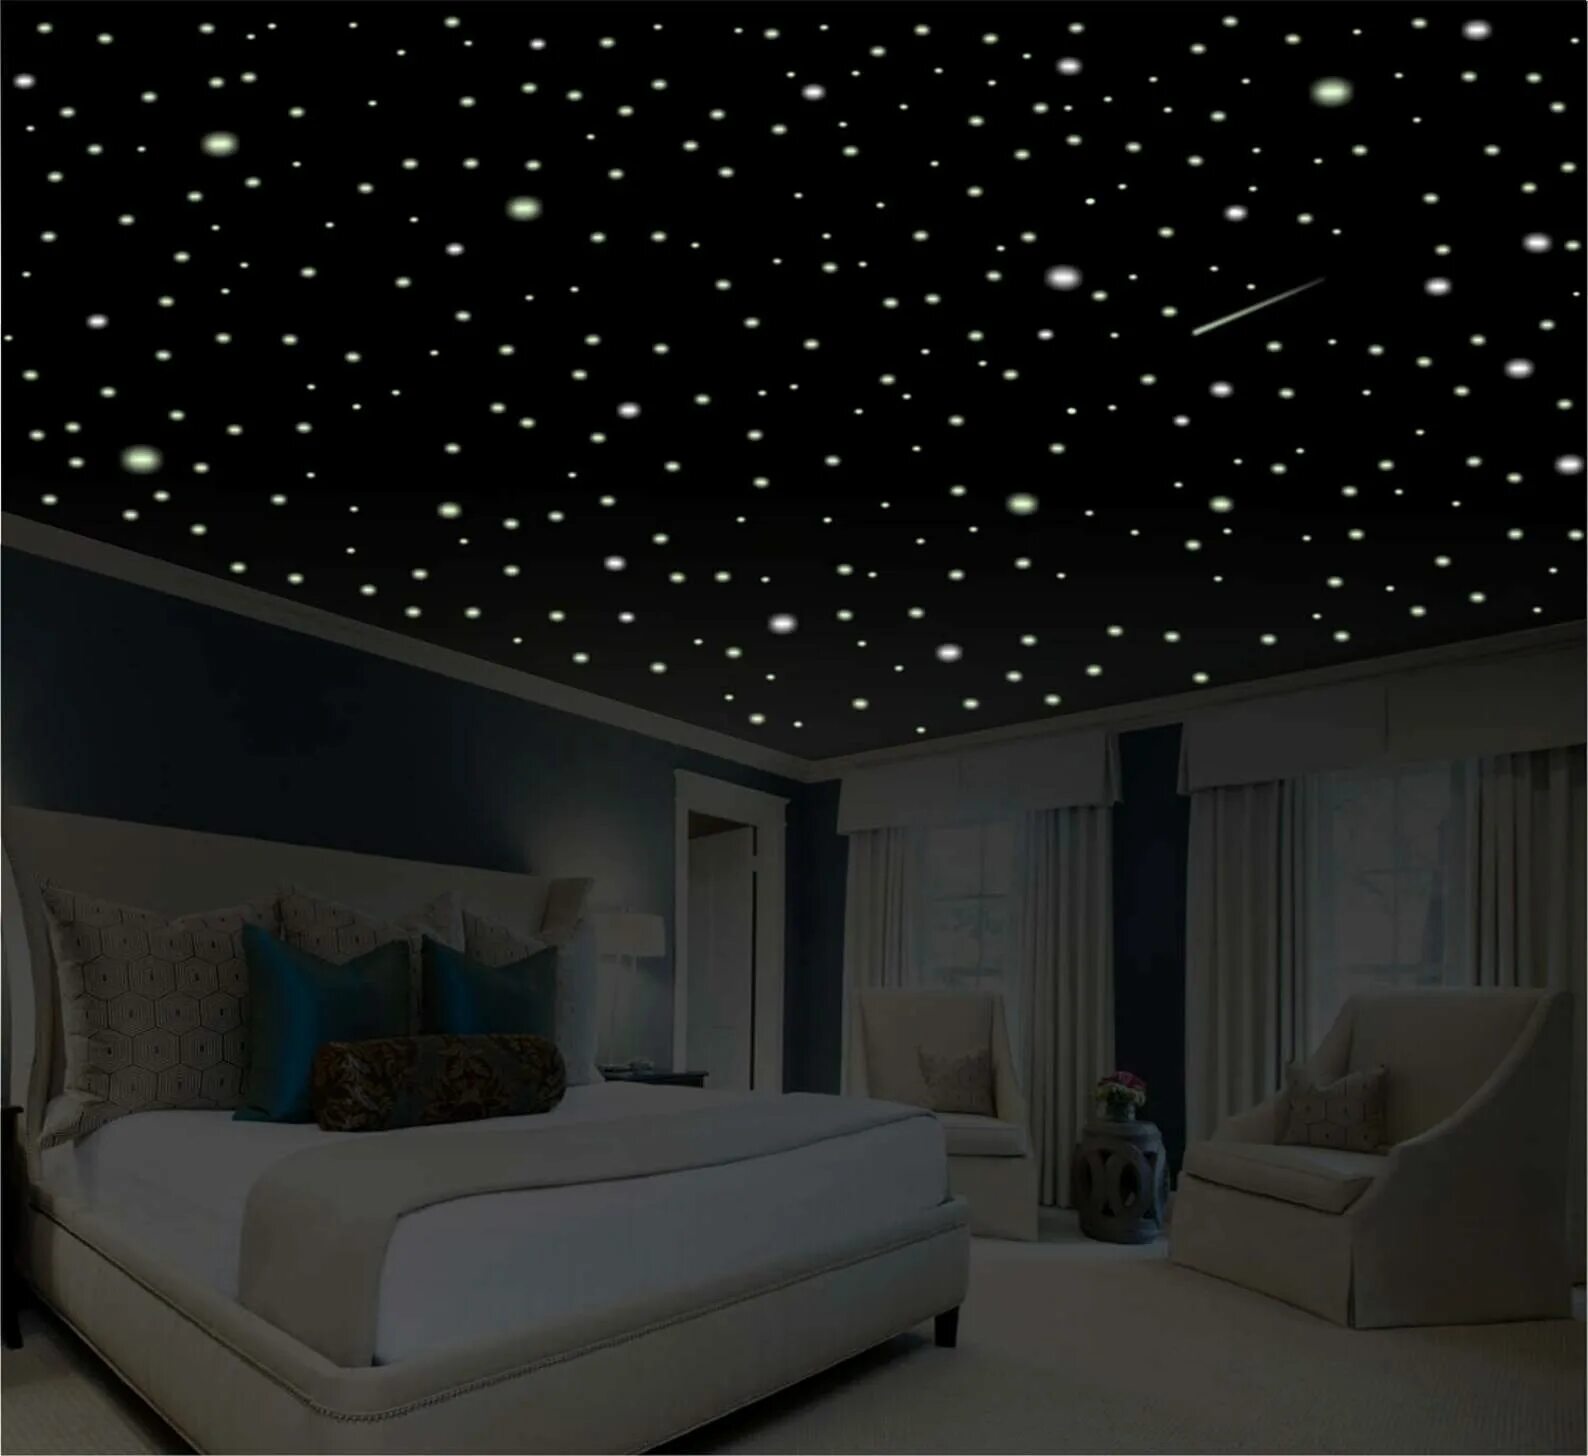 Делаем звездное небо. Натяжной потолок звездное небо. Звездное небо с мерцанием звезд + натяжной потолок. Потолок "звездное небо" 20 плиток. ВИПСИЛИНГ звездное небо.